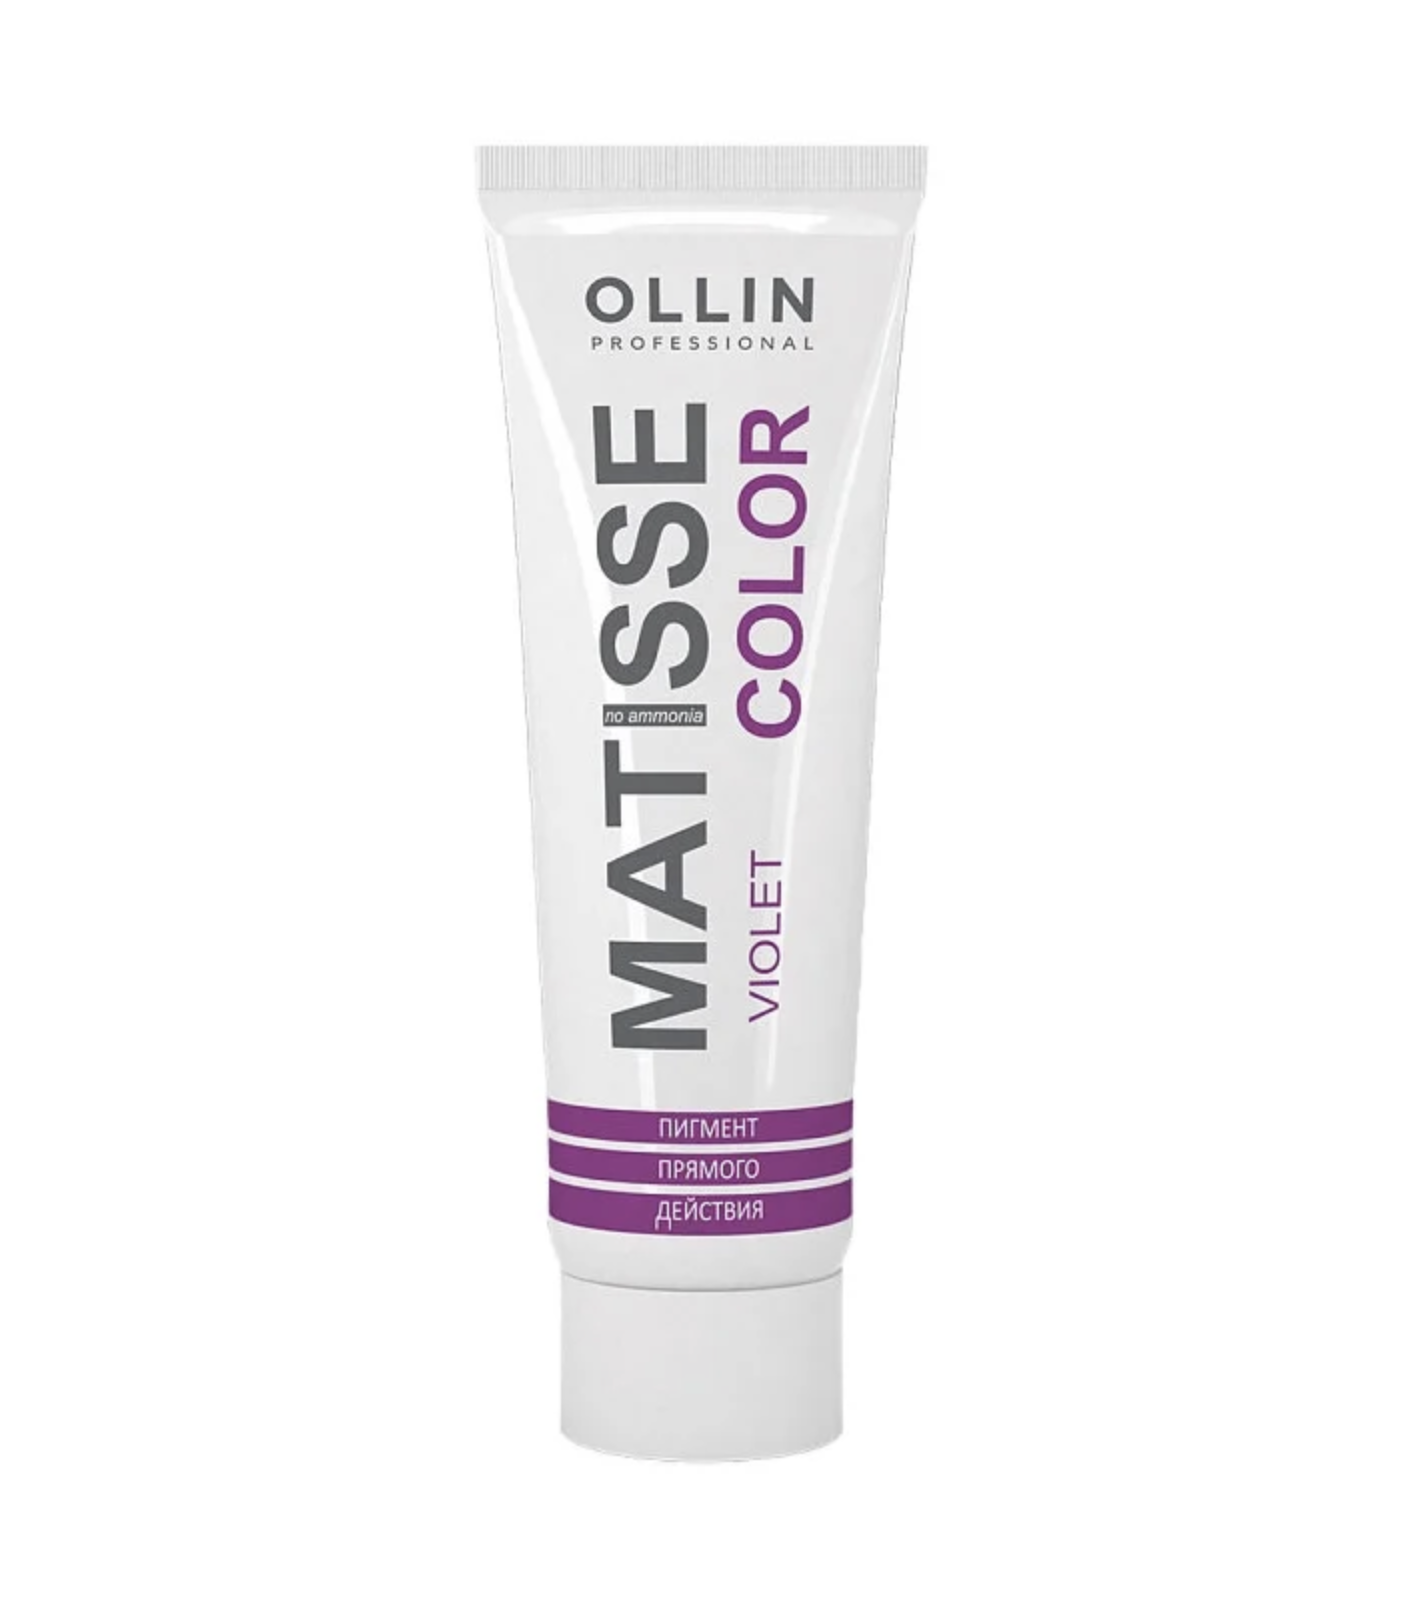   / Ollin Professional -      Matisse Violet  100 